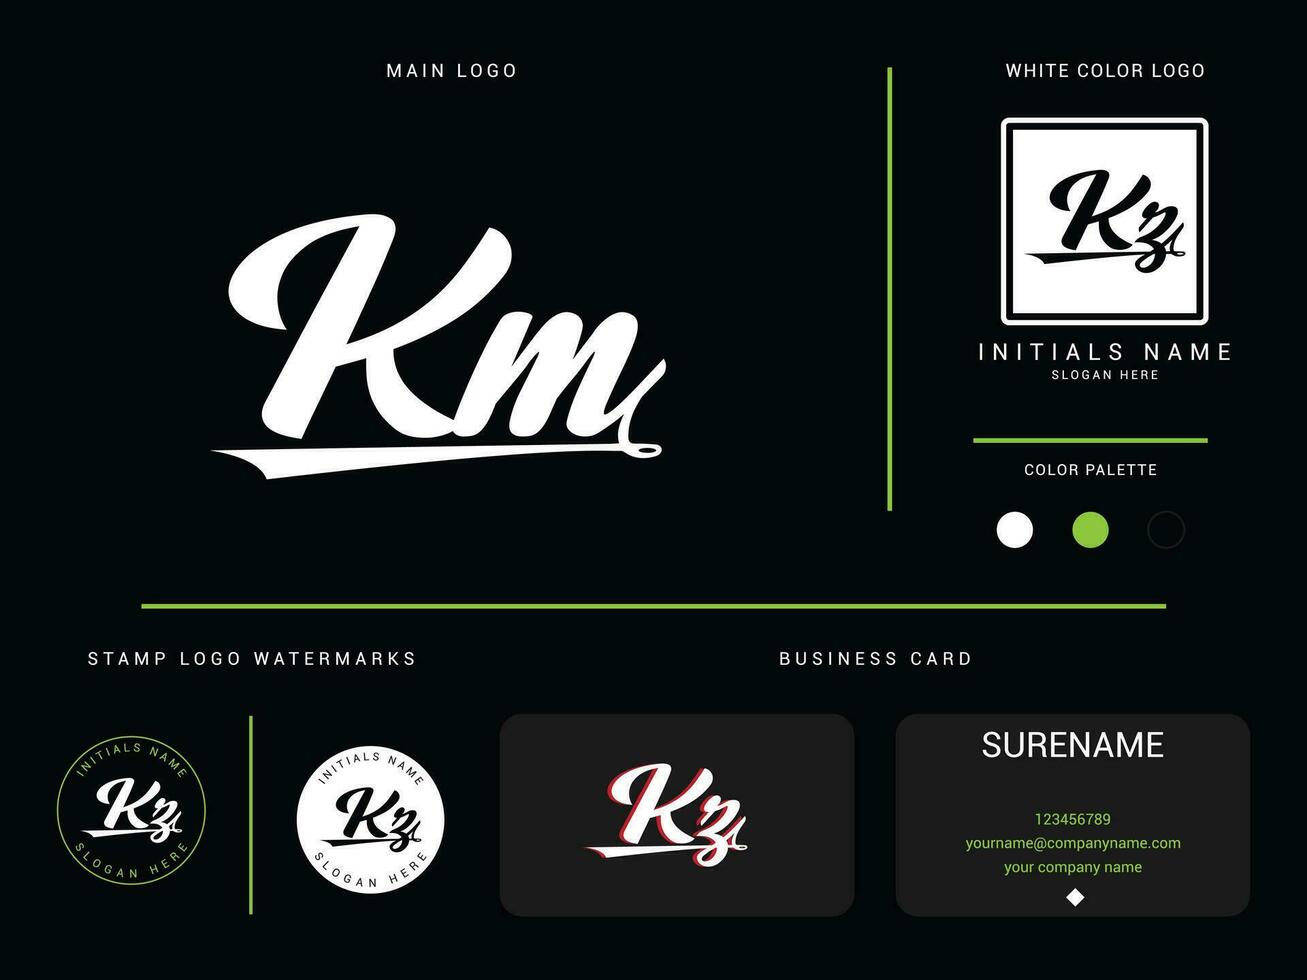 monogram km mode logotyp ikon, kläder Kläder kz km logotyp brev design med branding vektor